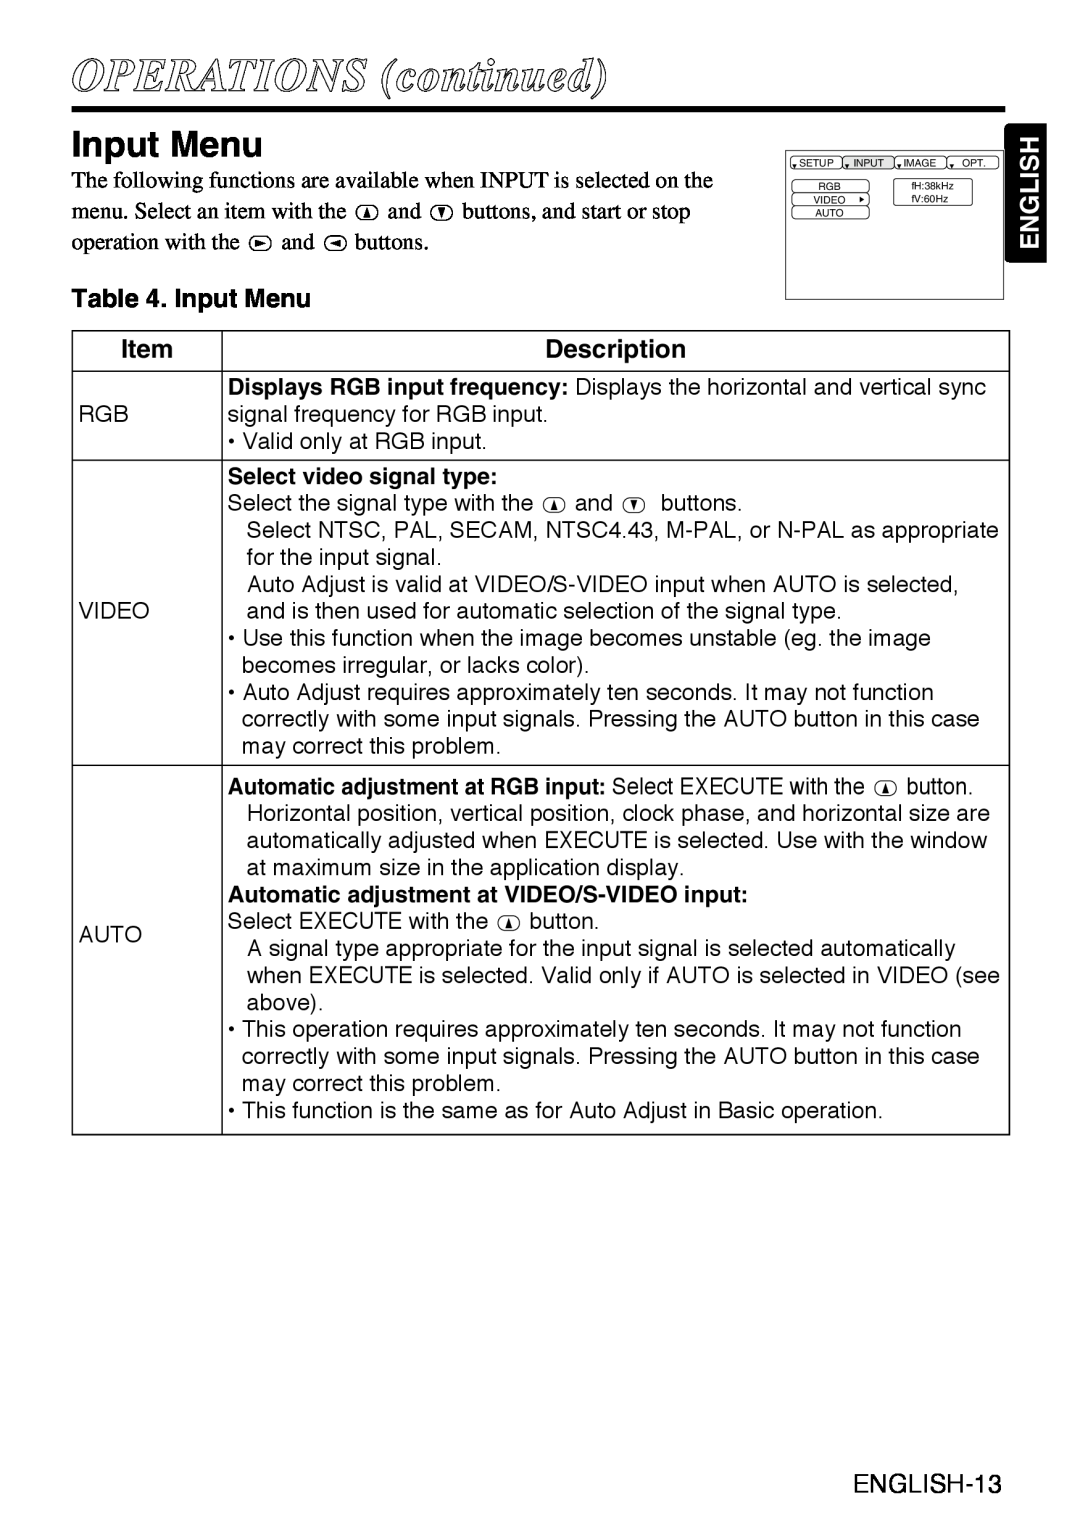 Grundig CP-731i user manual Input Menu, OPERATIONS continued, English, Description, Select video signal type 